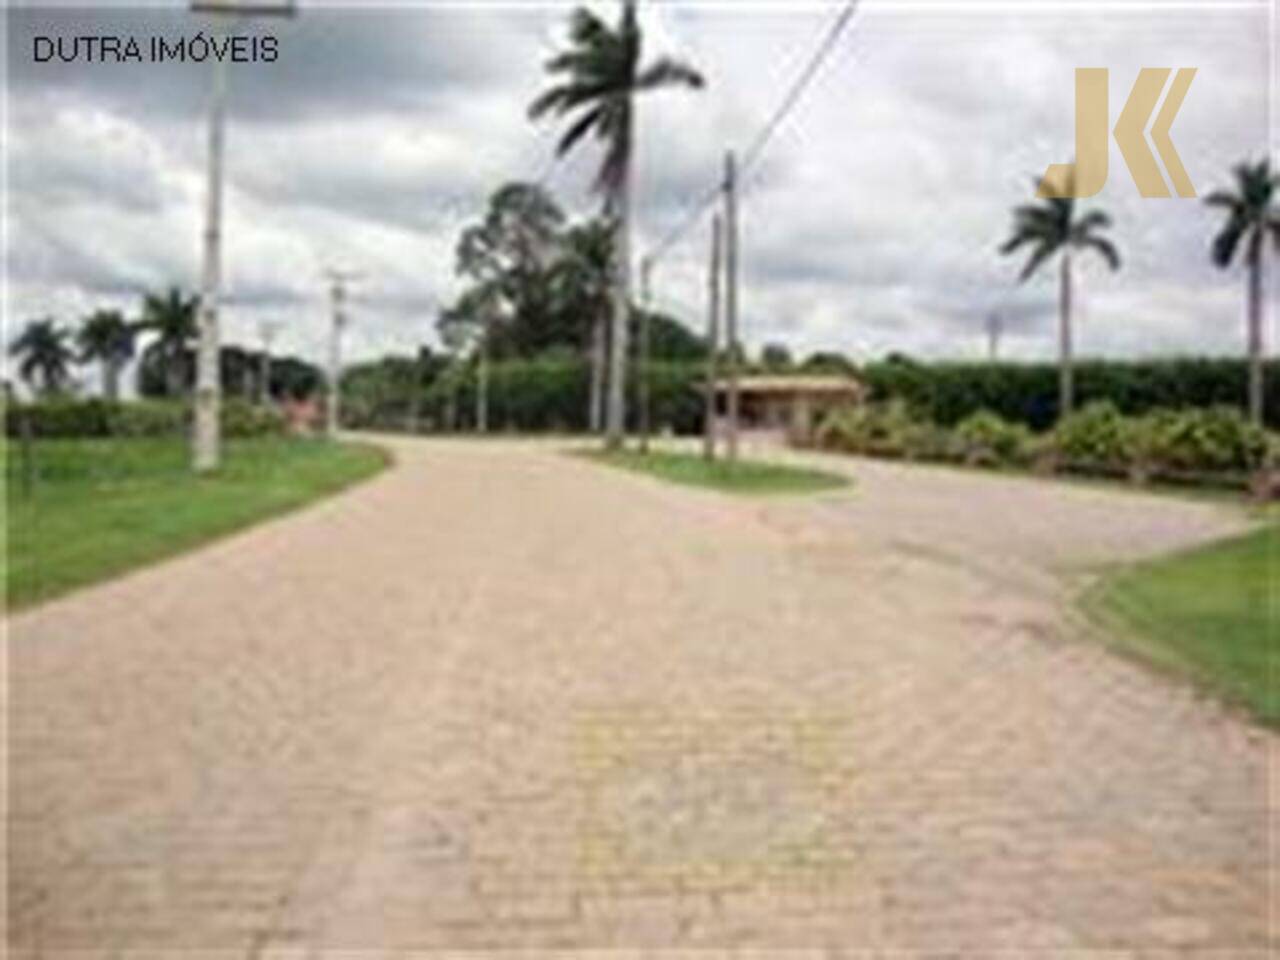 Terreno Condomínio Plazza Ville, Jaguariúna - SP